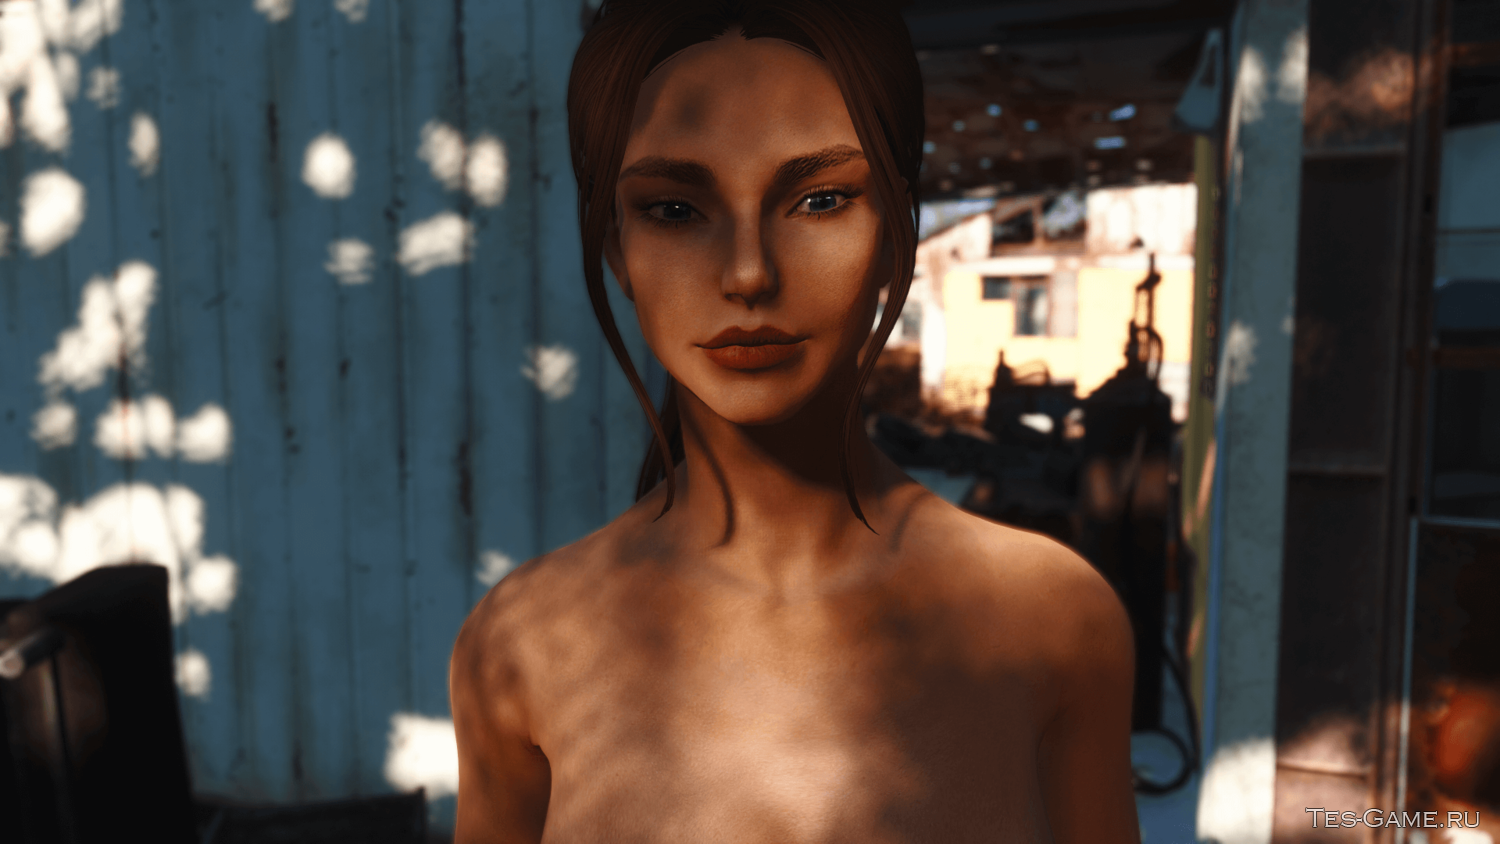 Новый HD ретекстур тел и лица в Fallout 4 для женских тел... 145.29 MB. 